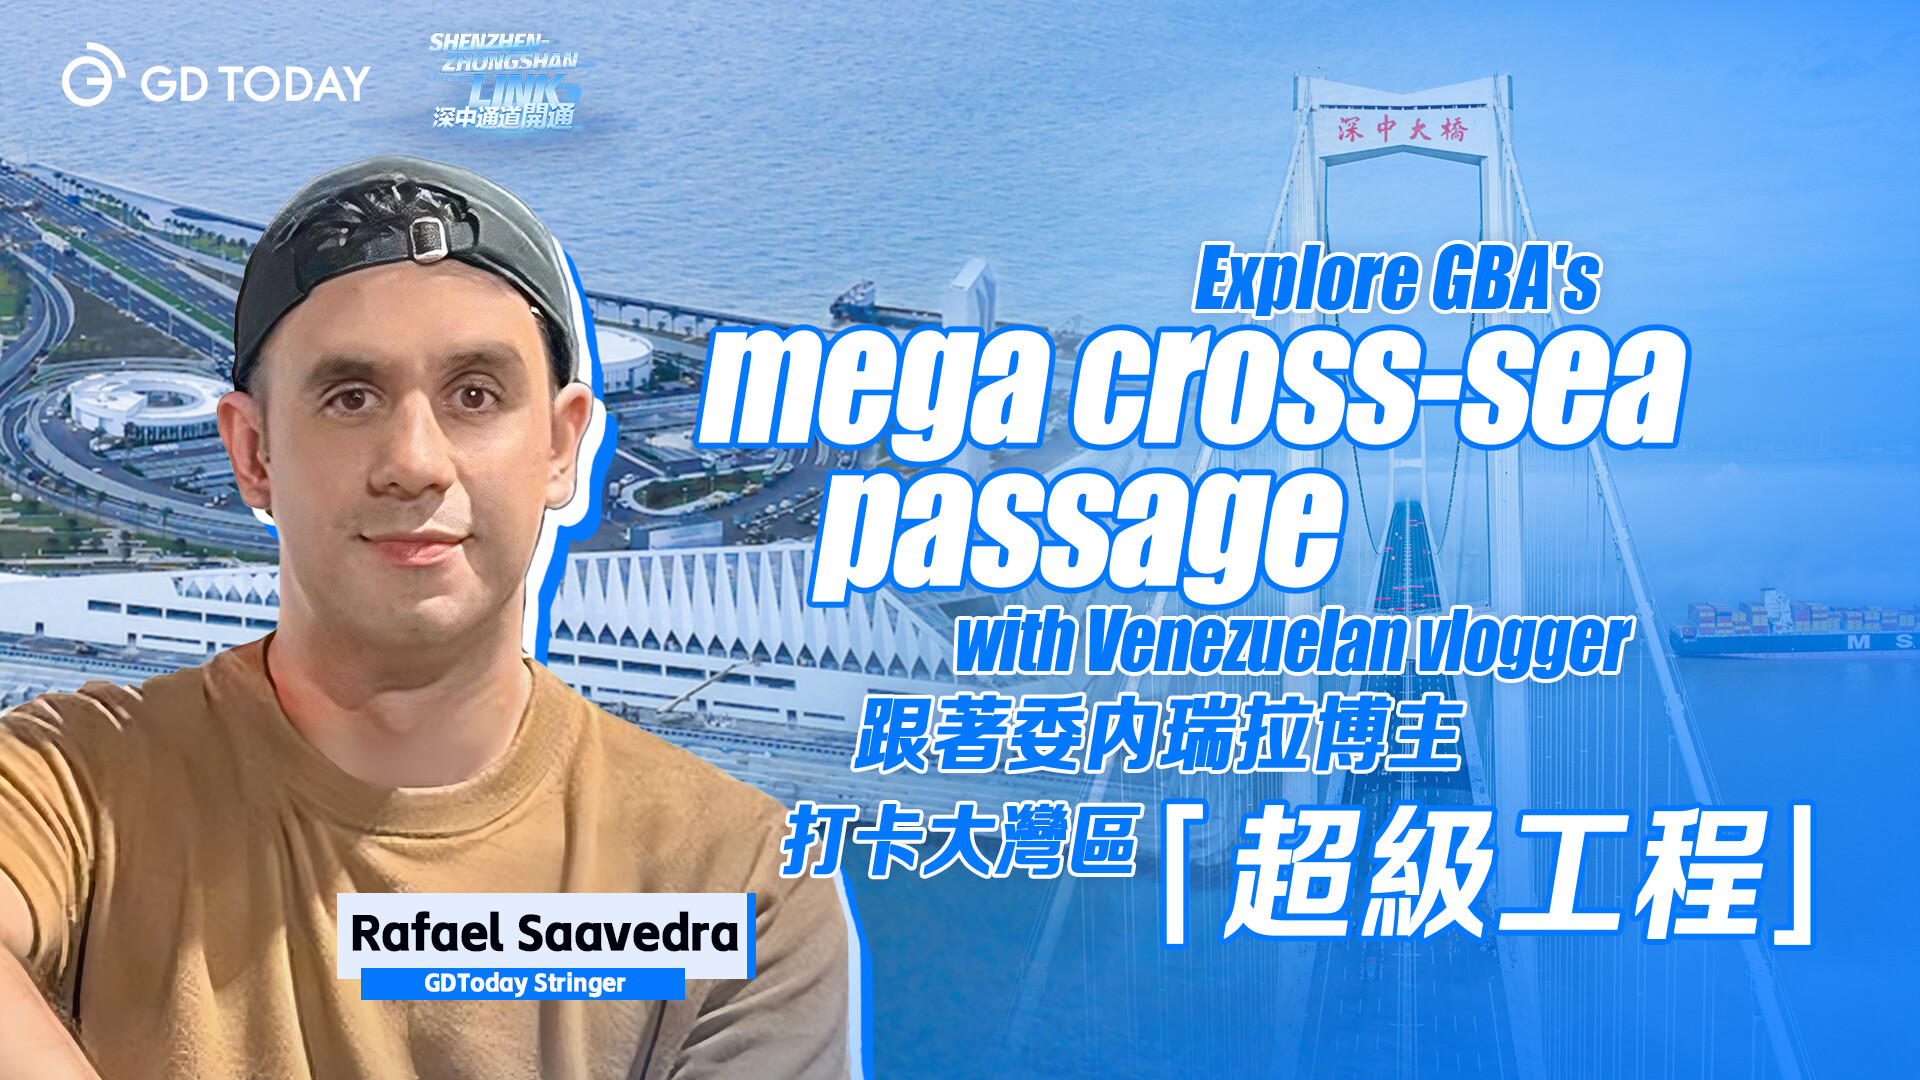 Explore GBA's mega cross-sea passage with GDToday's stringer from Venezuela